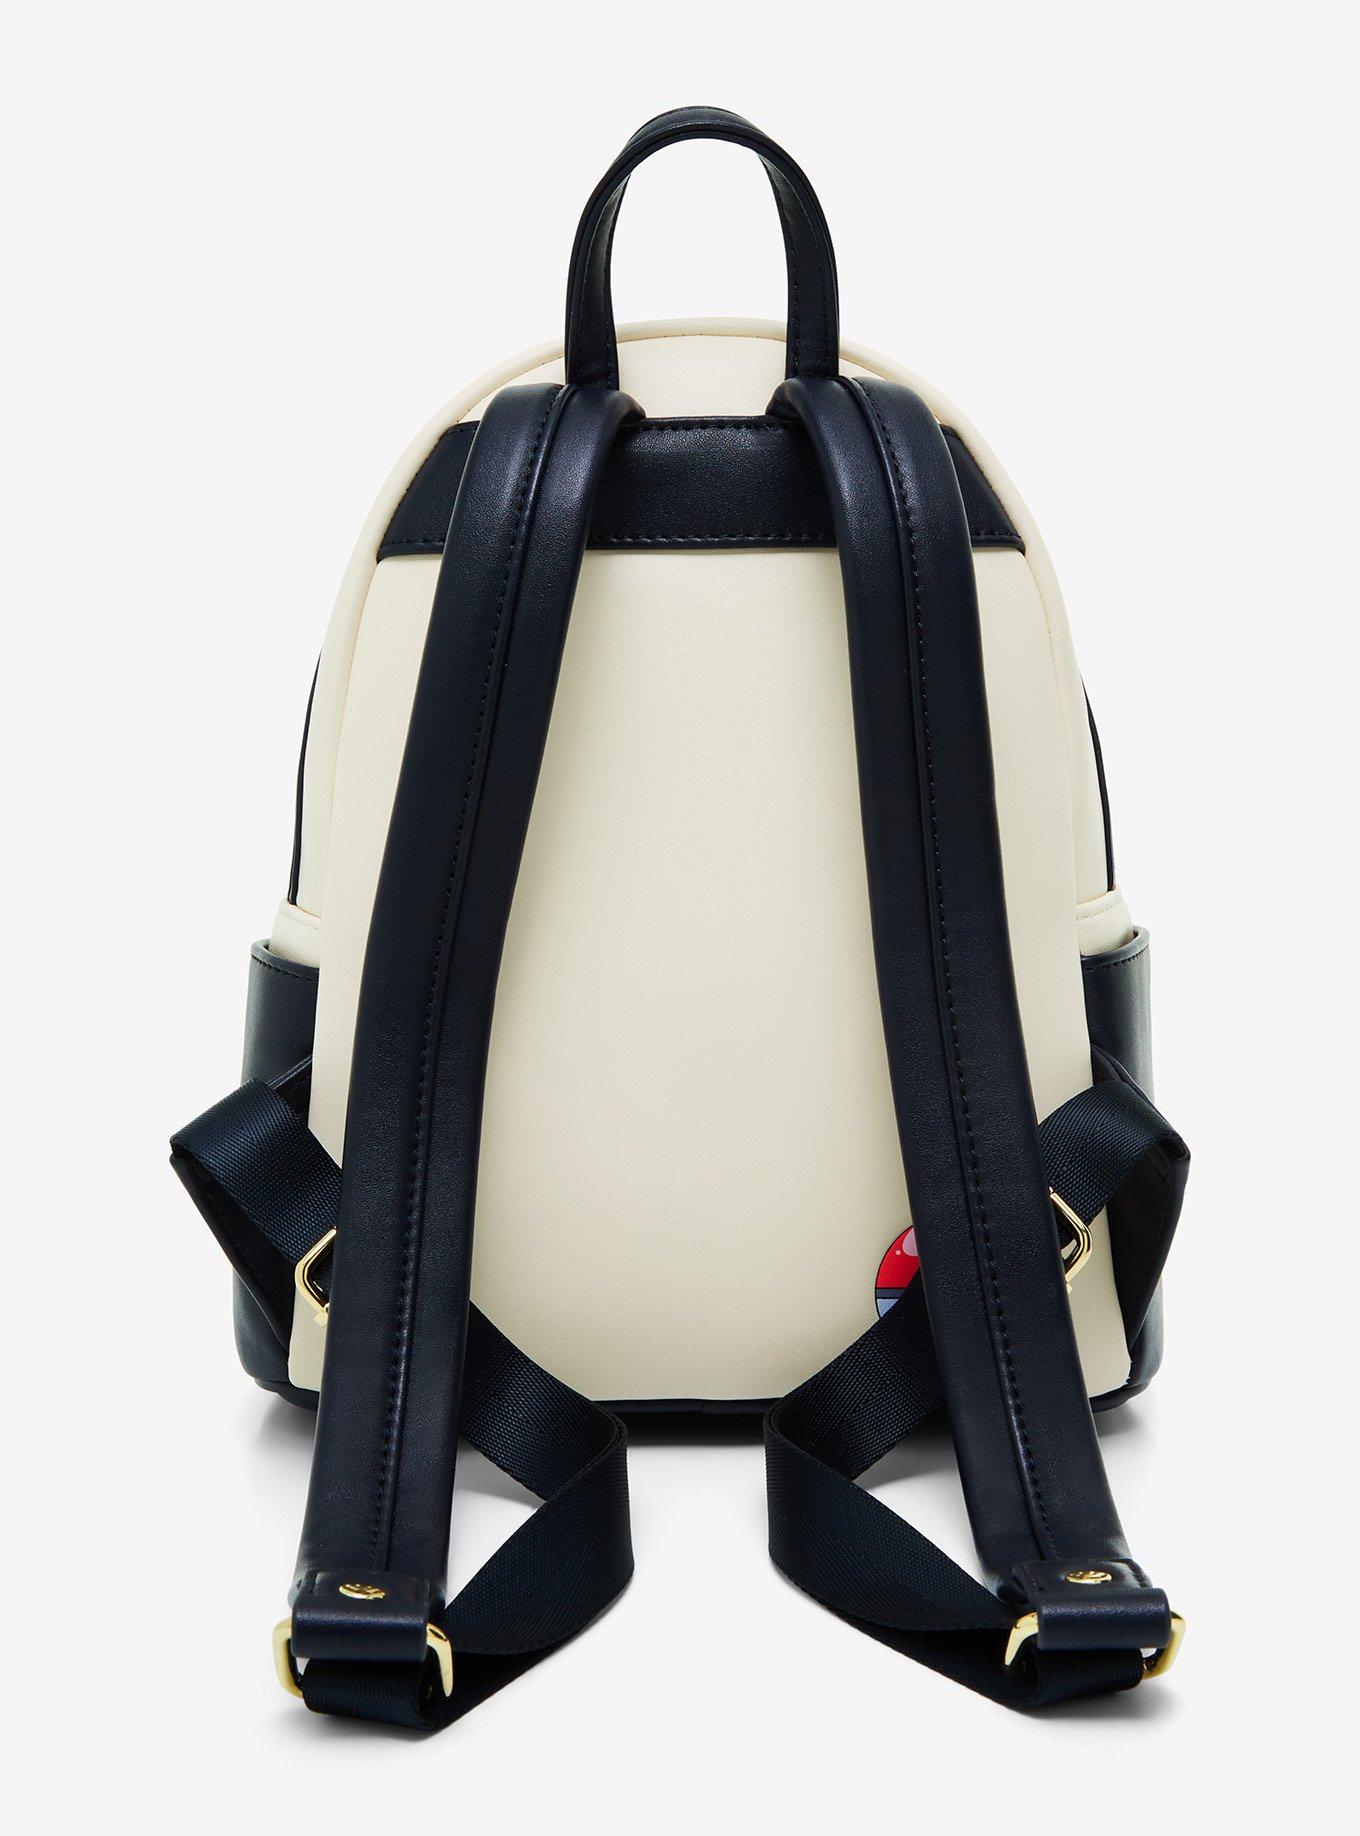 Loungefly Pokémon Ash & Pokémon Floral Mini Backpack - BoxLunch Exclusive, , alternate